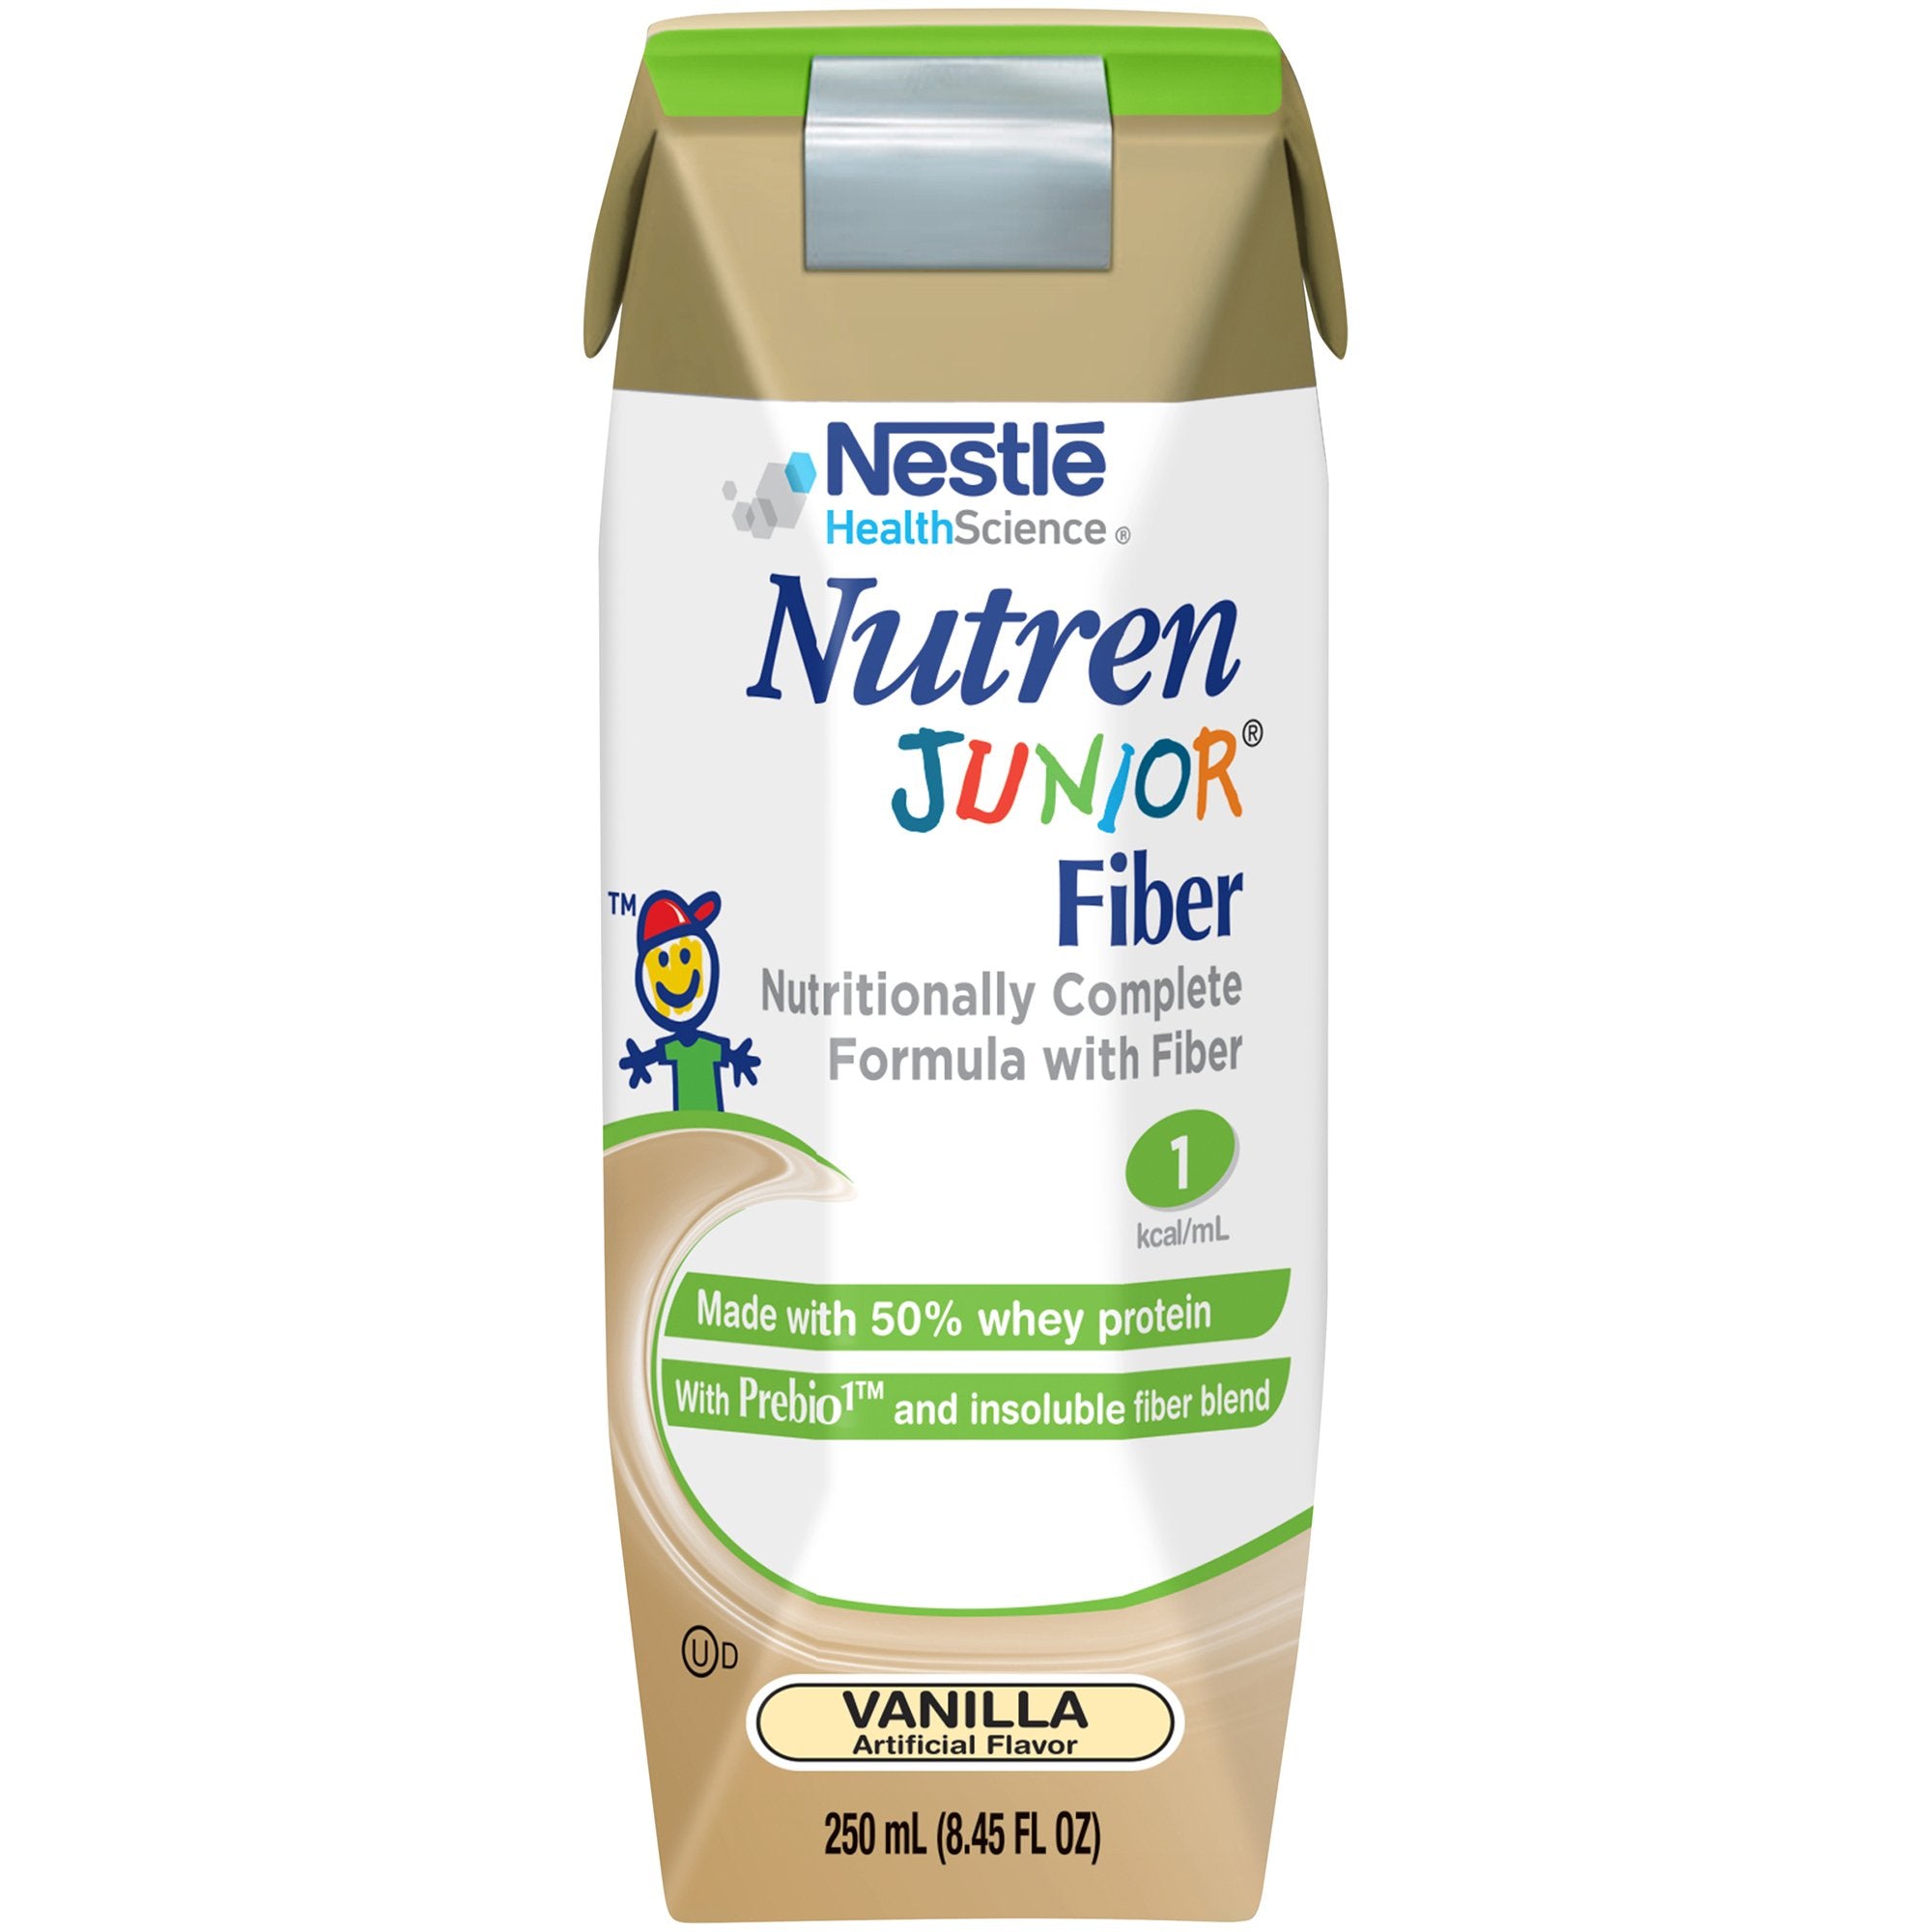 Nutren Junior Fiber Pediatric Oral Supplement / Tube Feeding Formula, Vanilla, 8.45 oz. Tetra Prisma -Case of 24